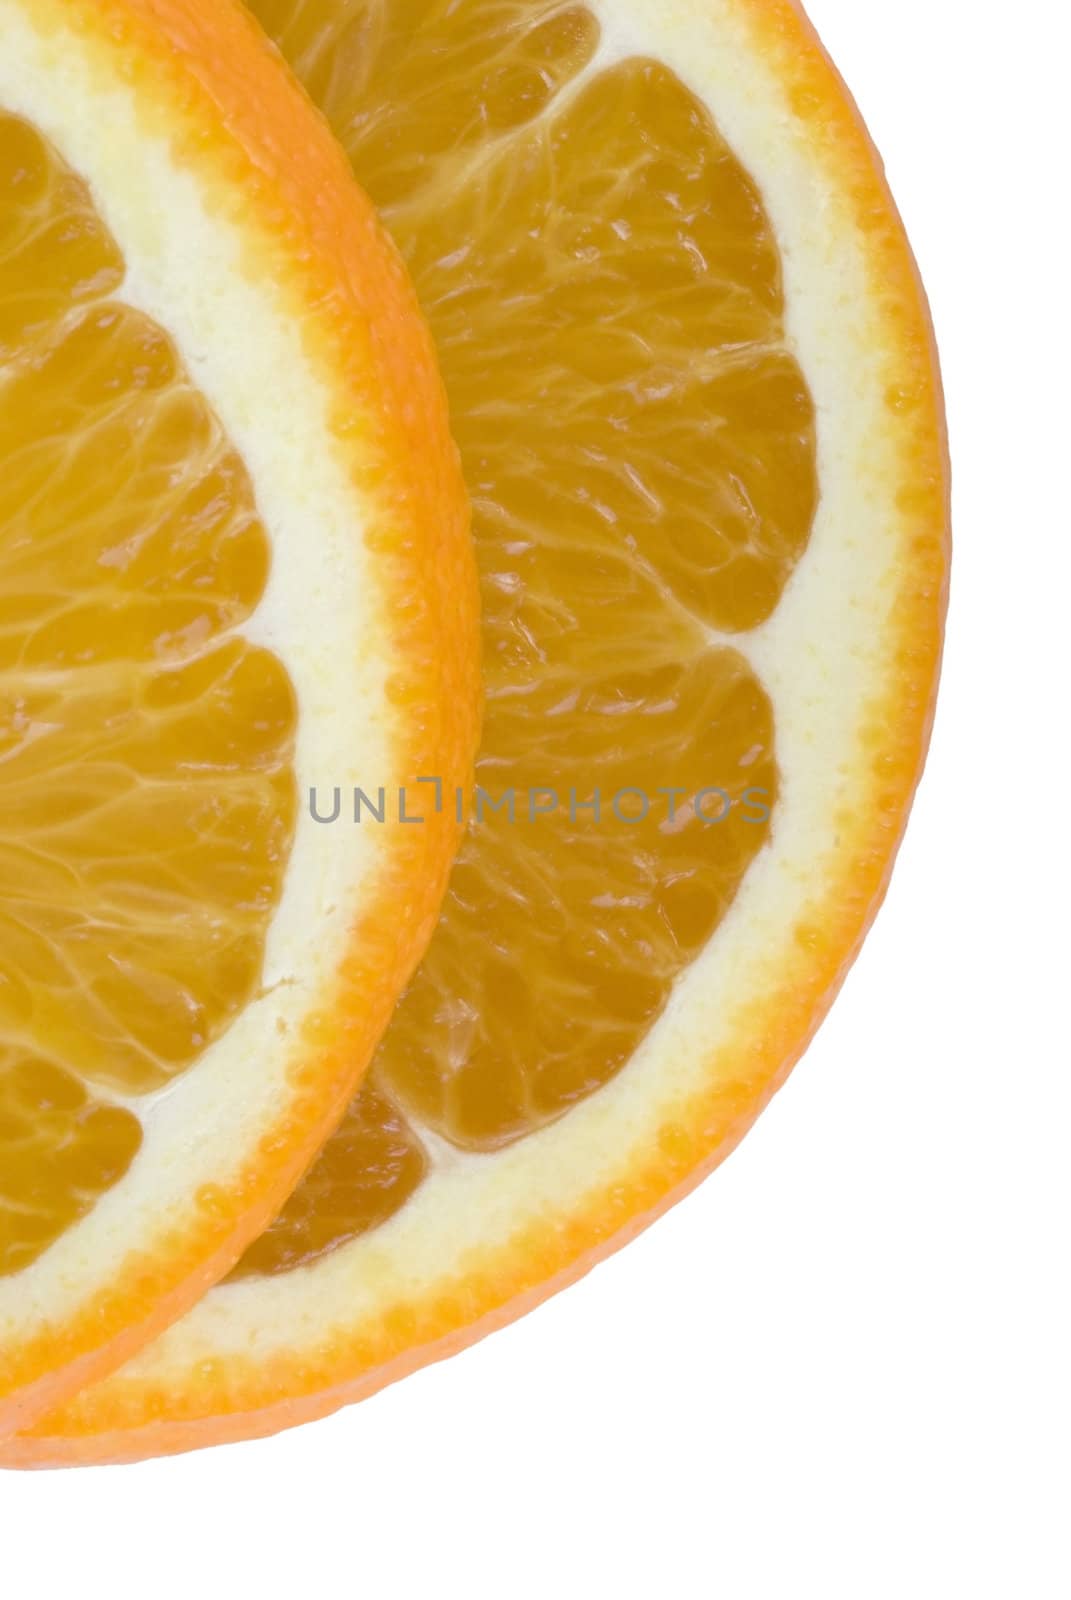 two slices of orange on a white backdrop